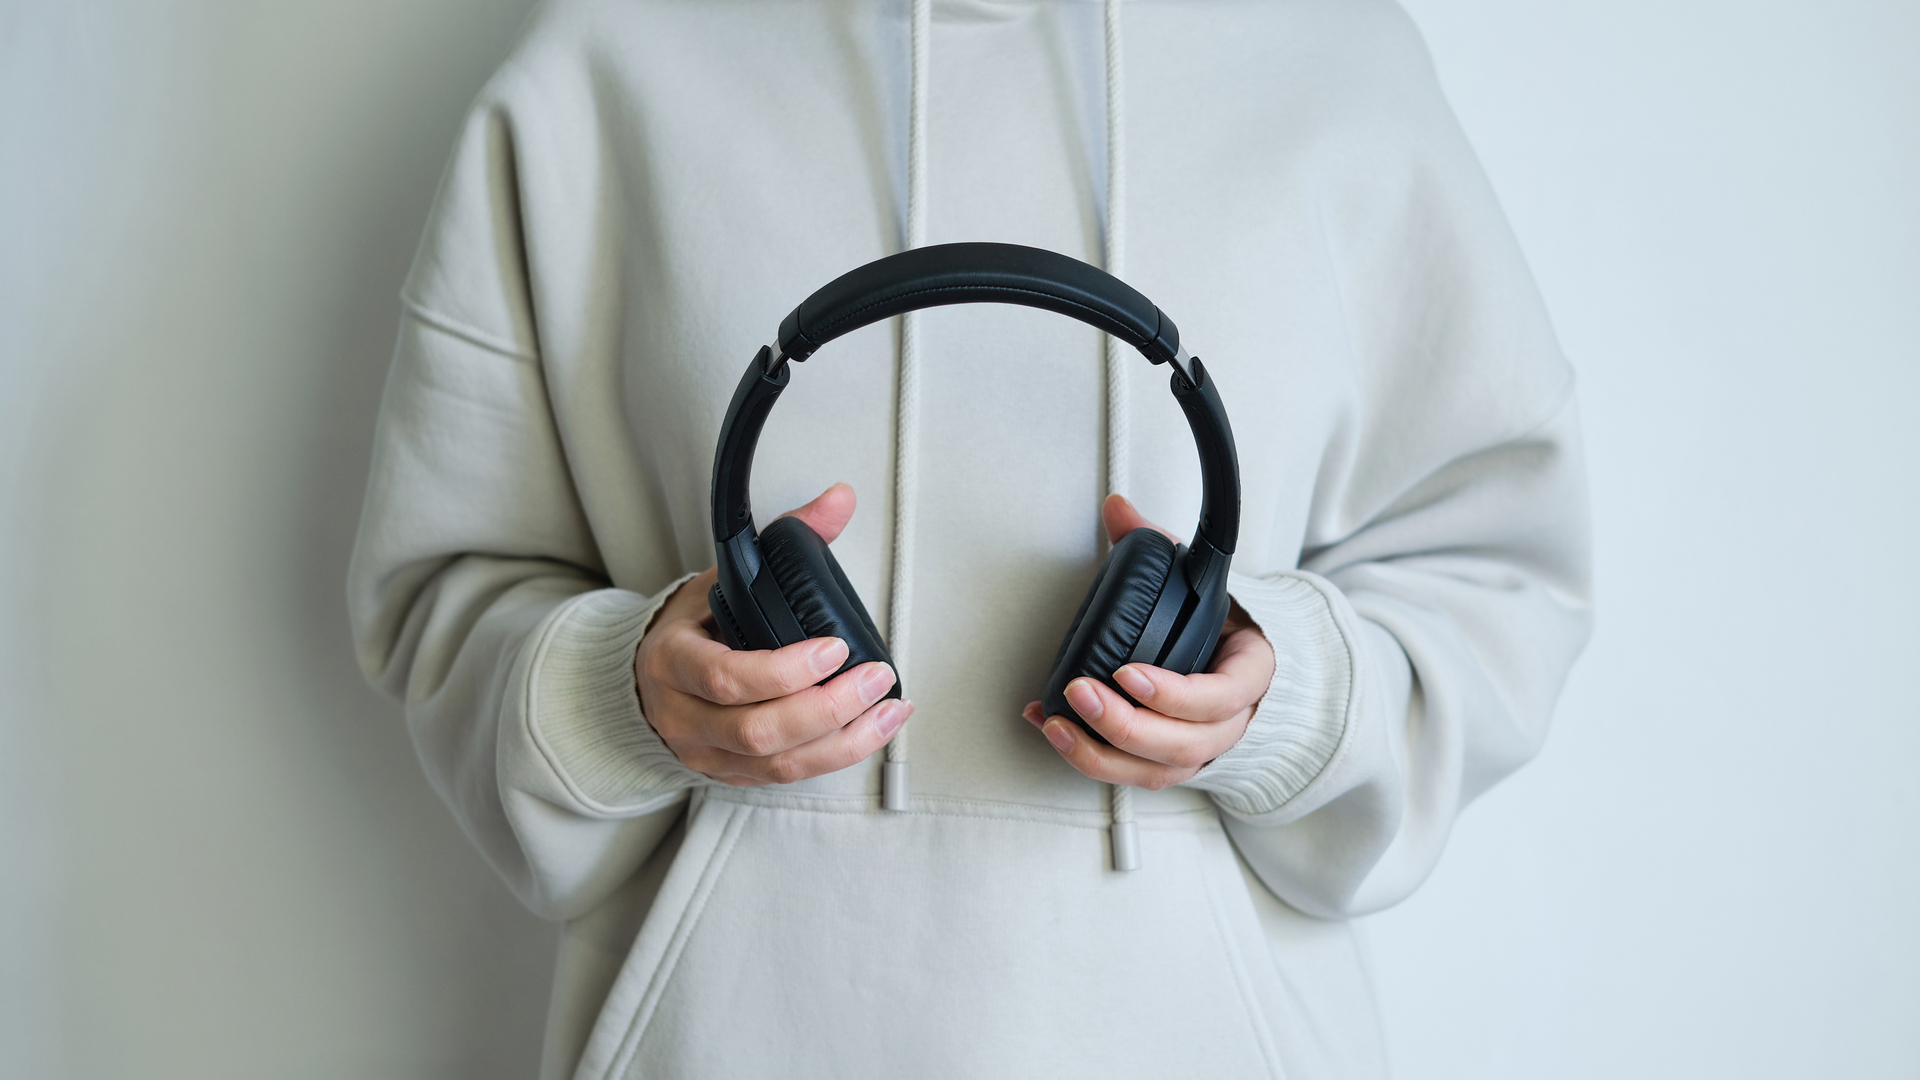 MINDD BRA - “Someone invented wireless headphones. Surely someone